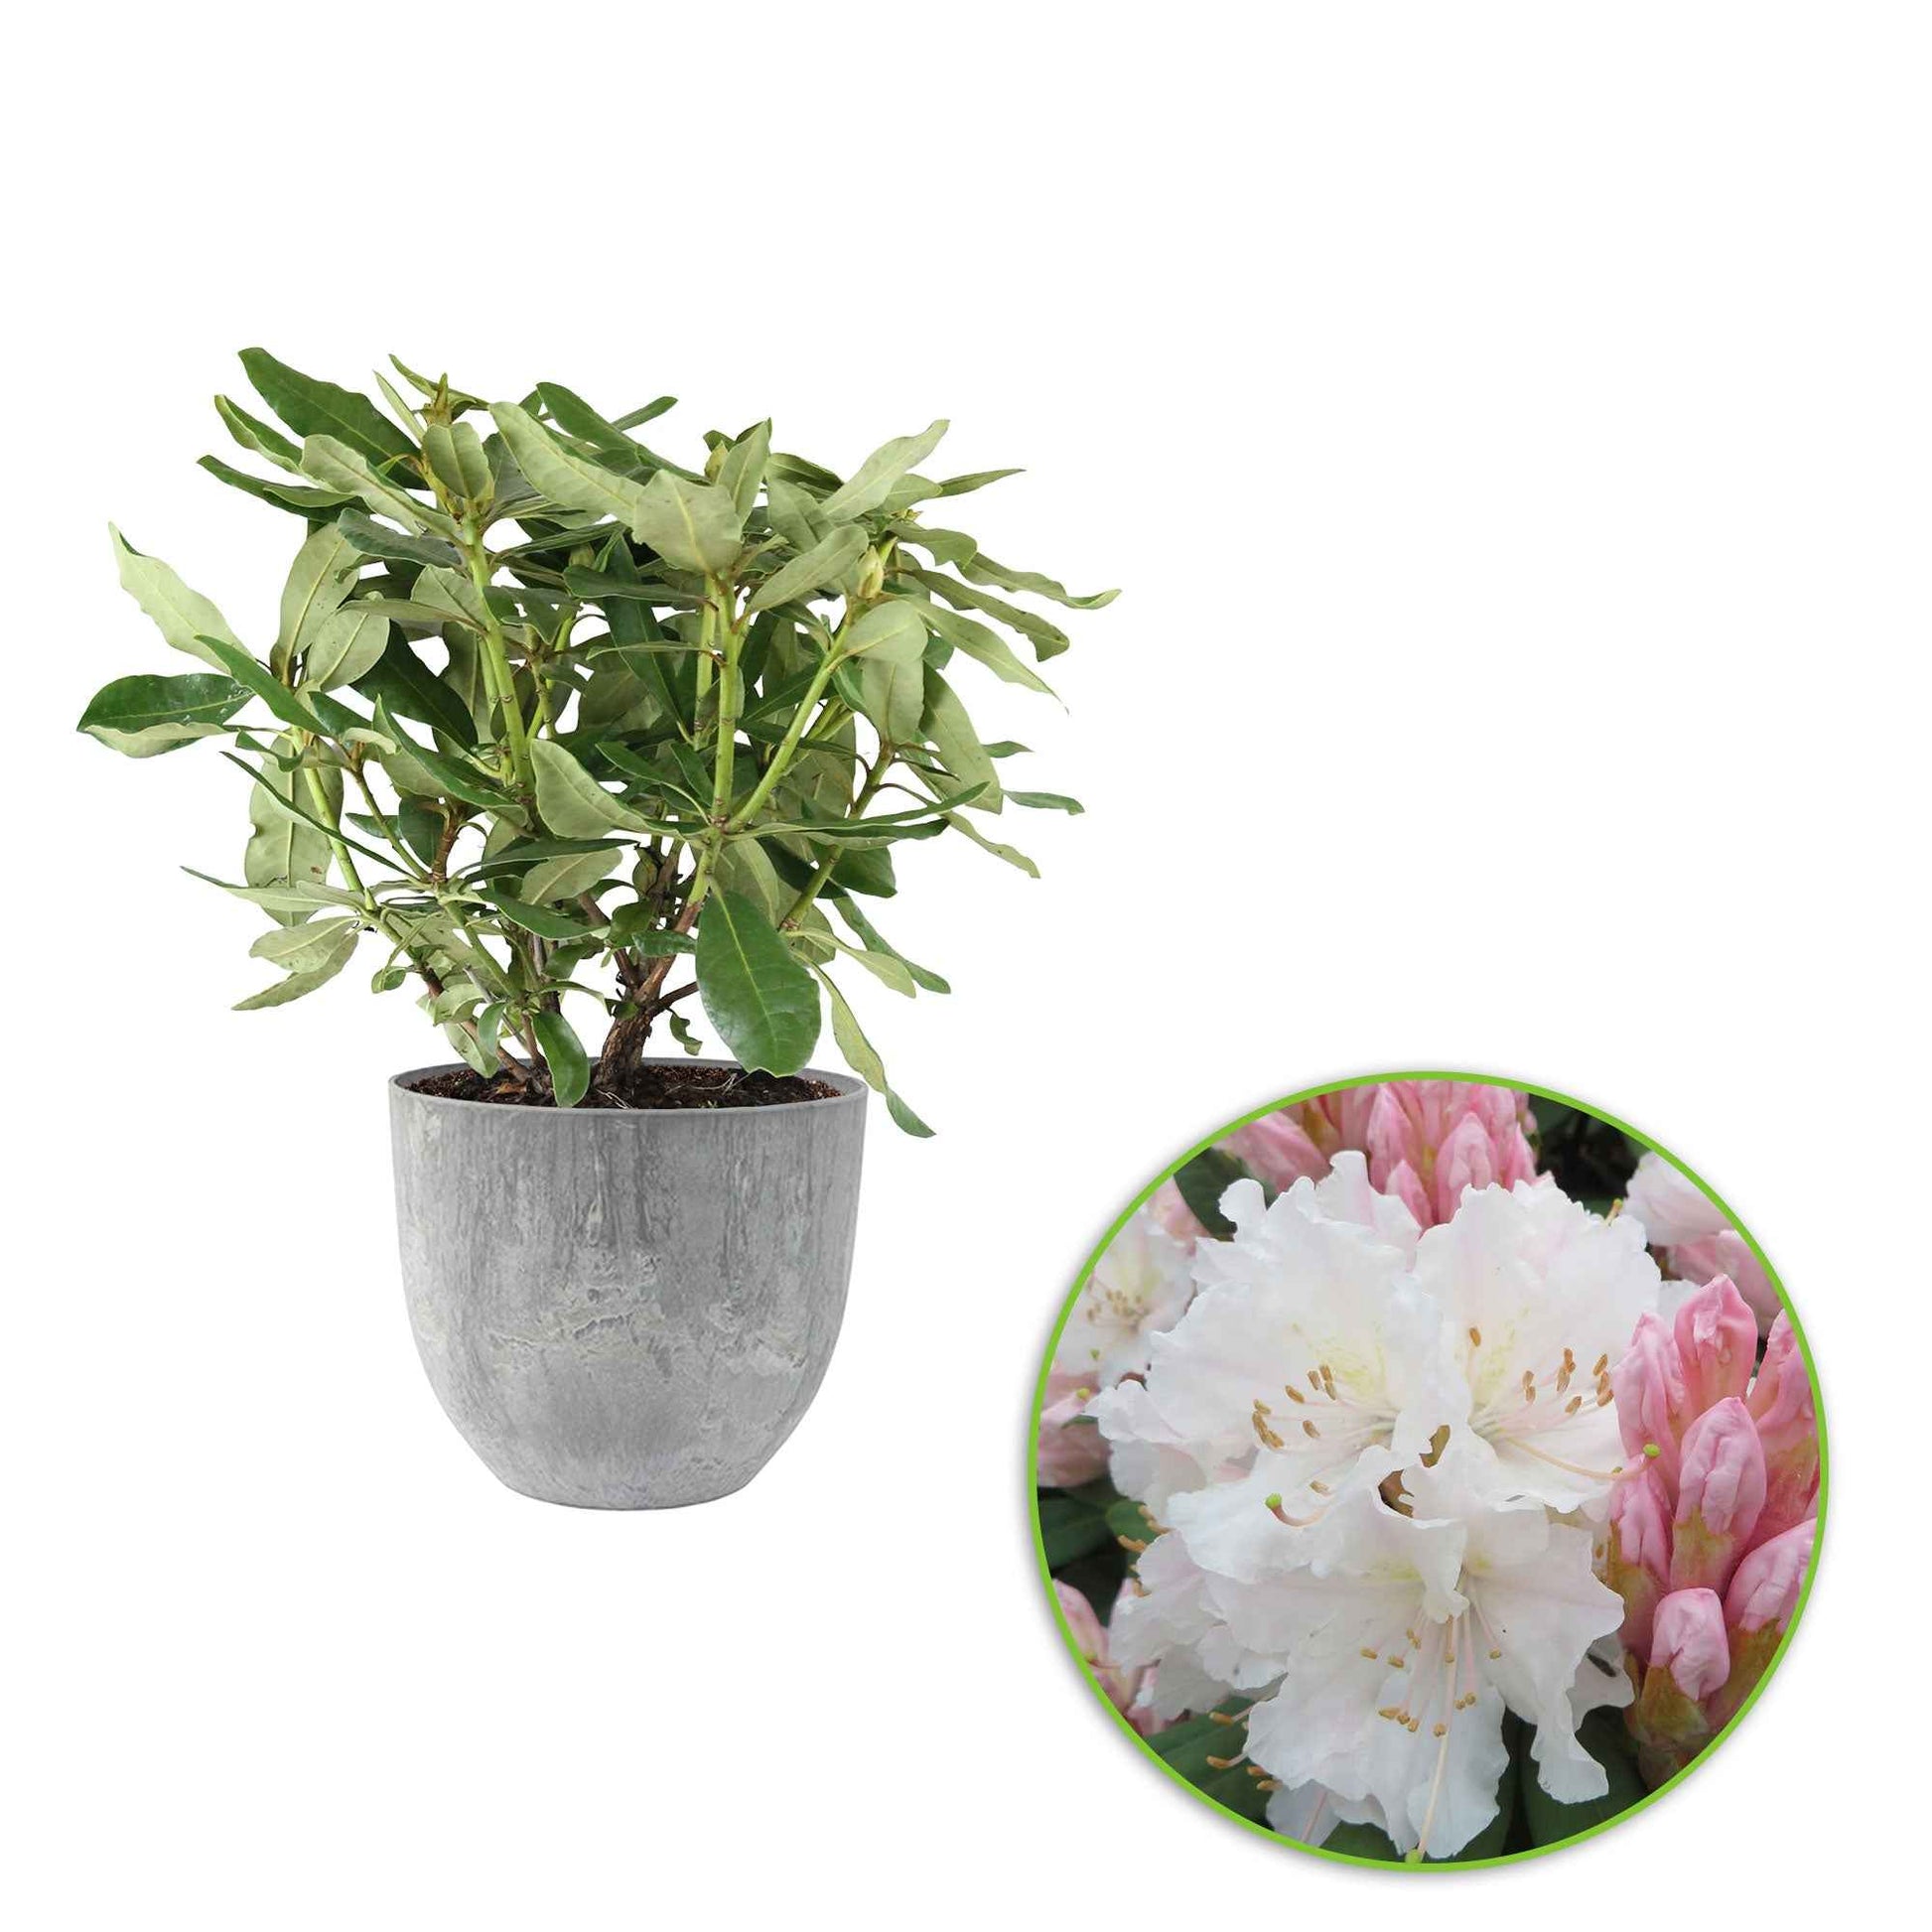 Rhododendron 'Cunningham's White' blanc avec cache-pot - Arbustes fleuris